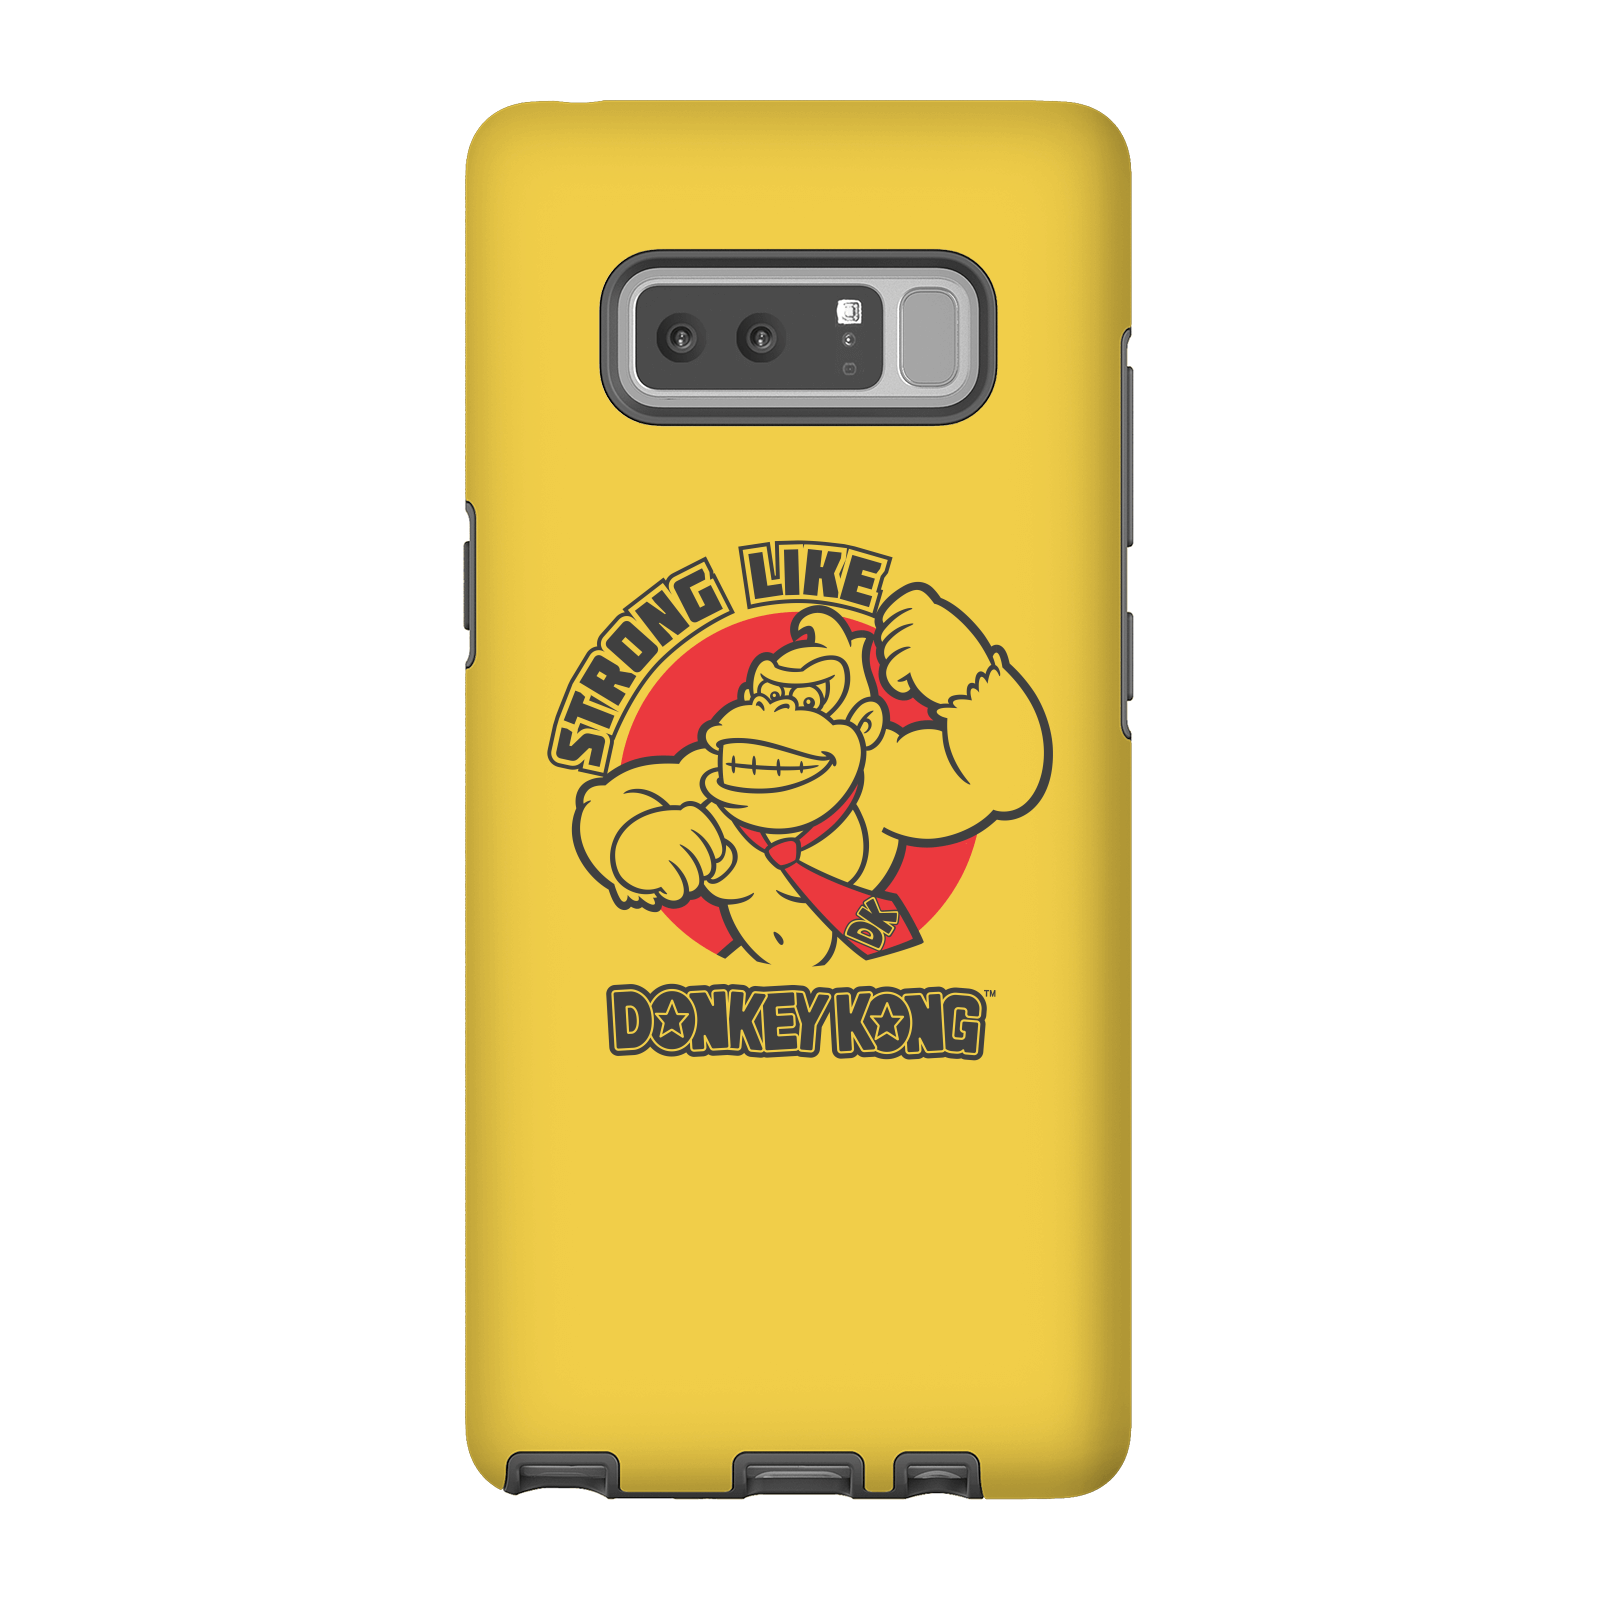 Nintendo Donkey Kong Strong Like Donkey Kong Phone Case - Samsung Note 8 - Tough Case - Matte